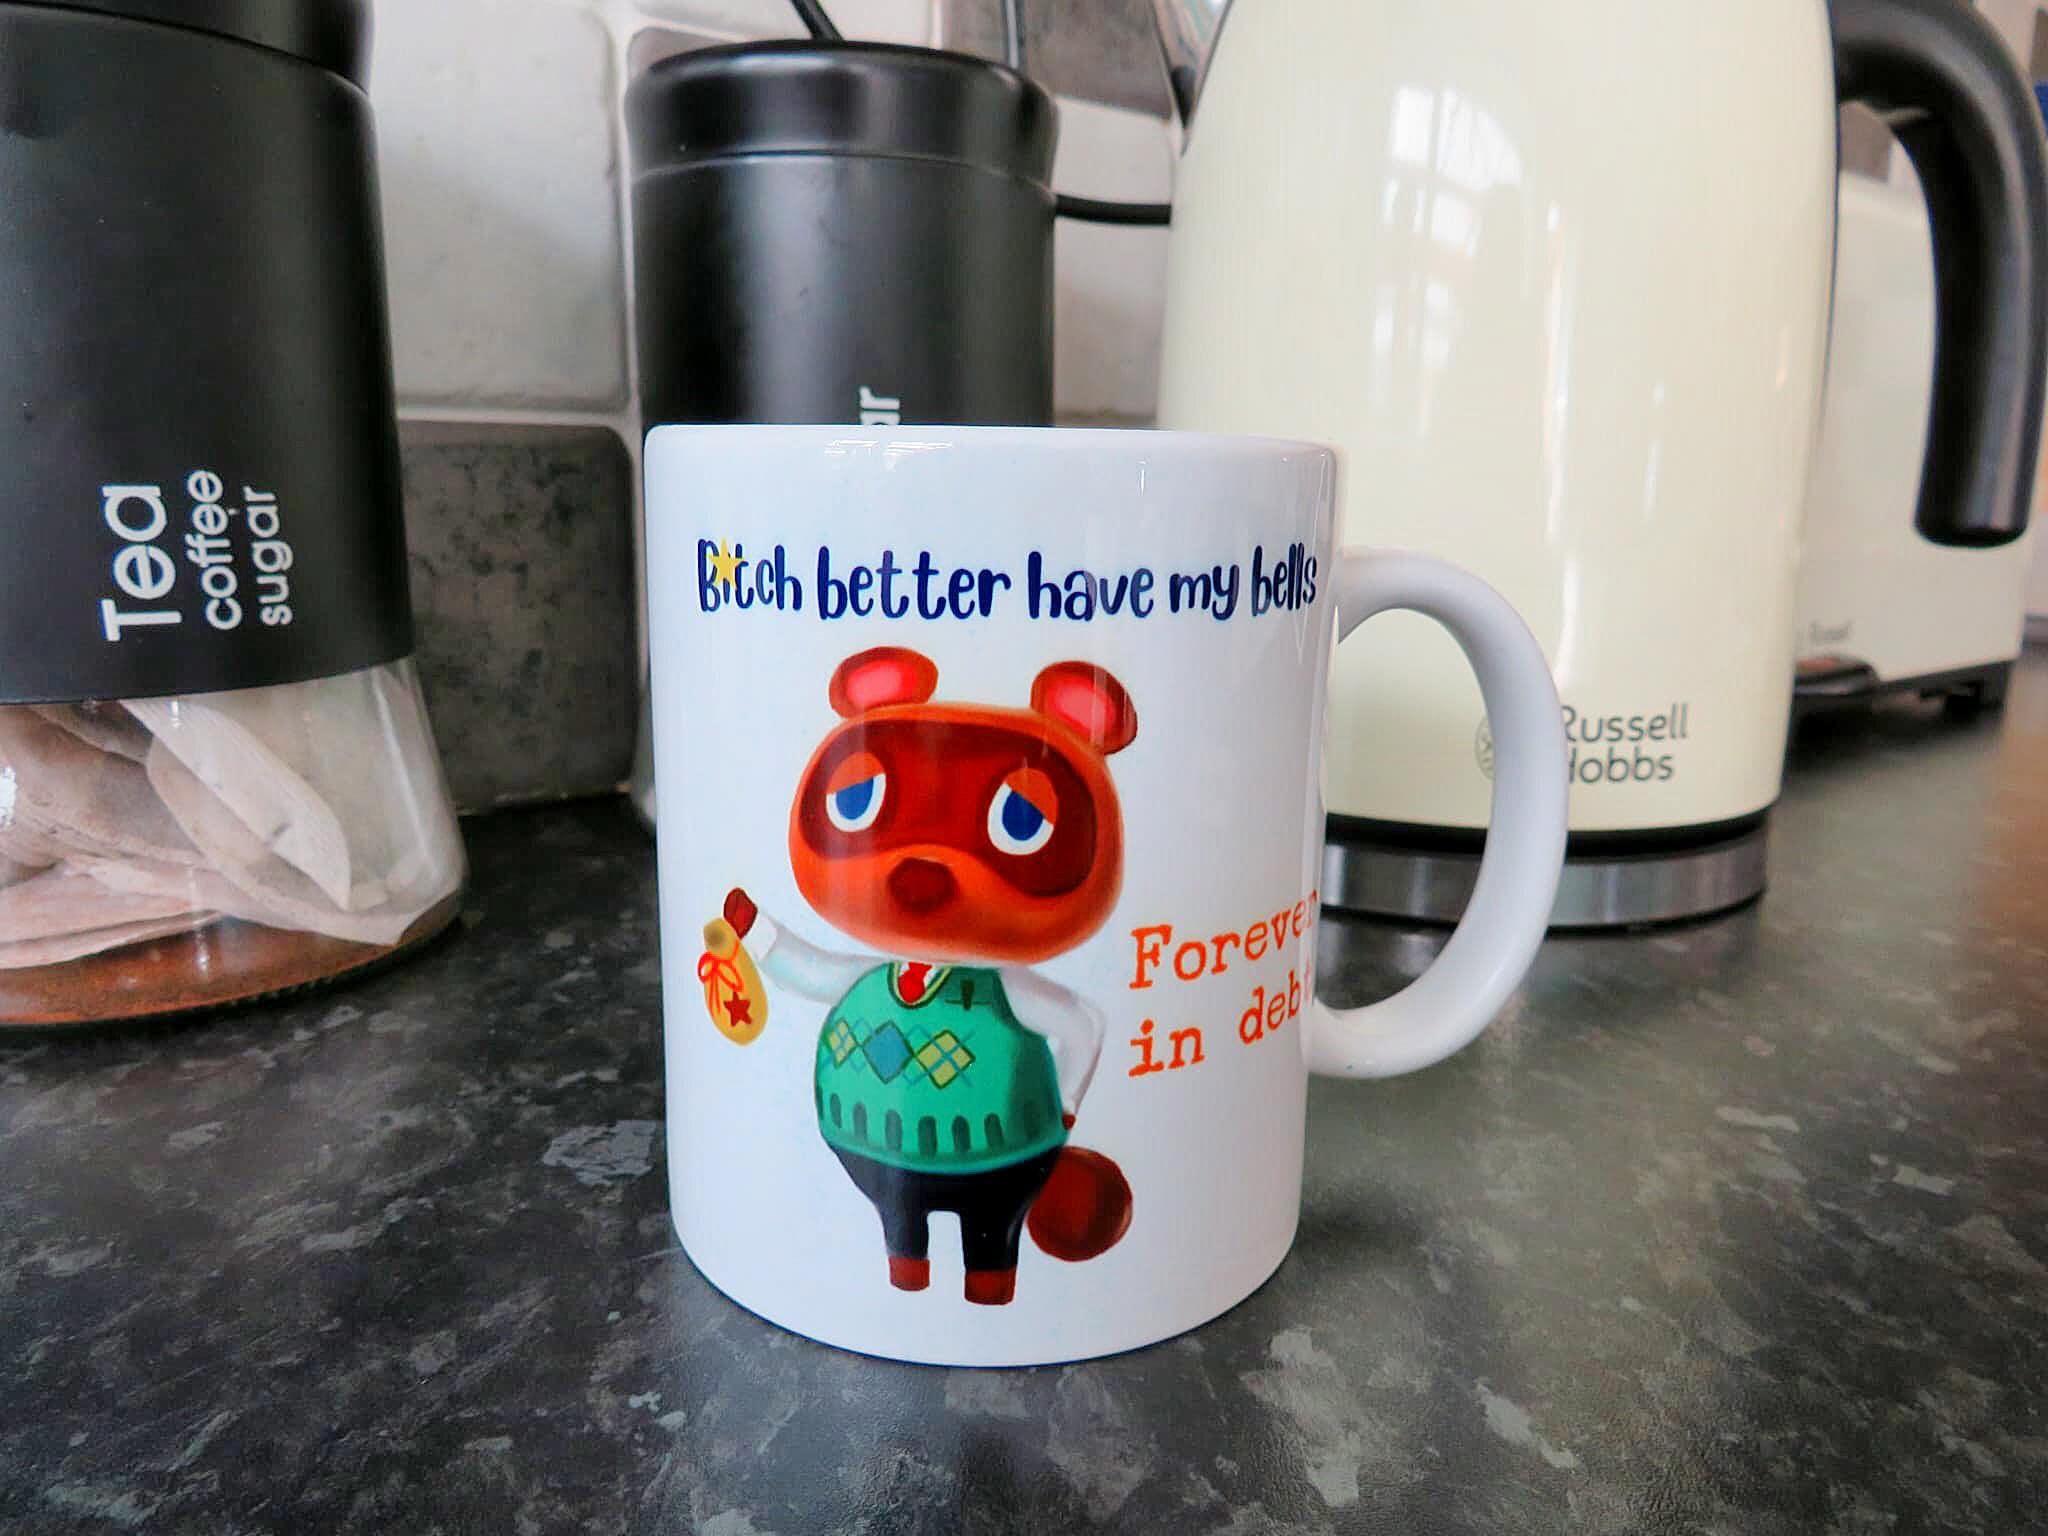 Cute animal crossing inspired Mug- New horizons - Tom Nook -Bells - Forever in debt-Animal Crossing Gift UK